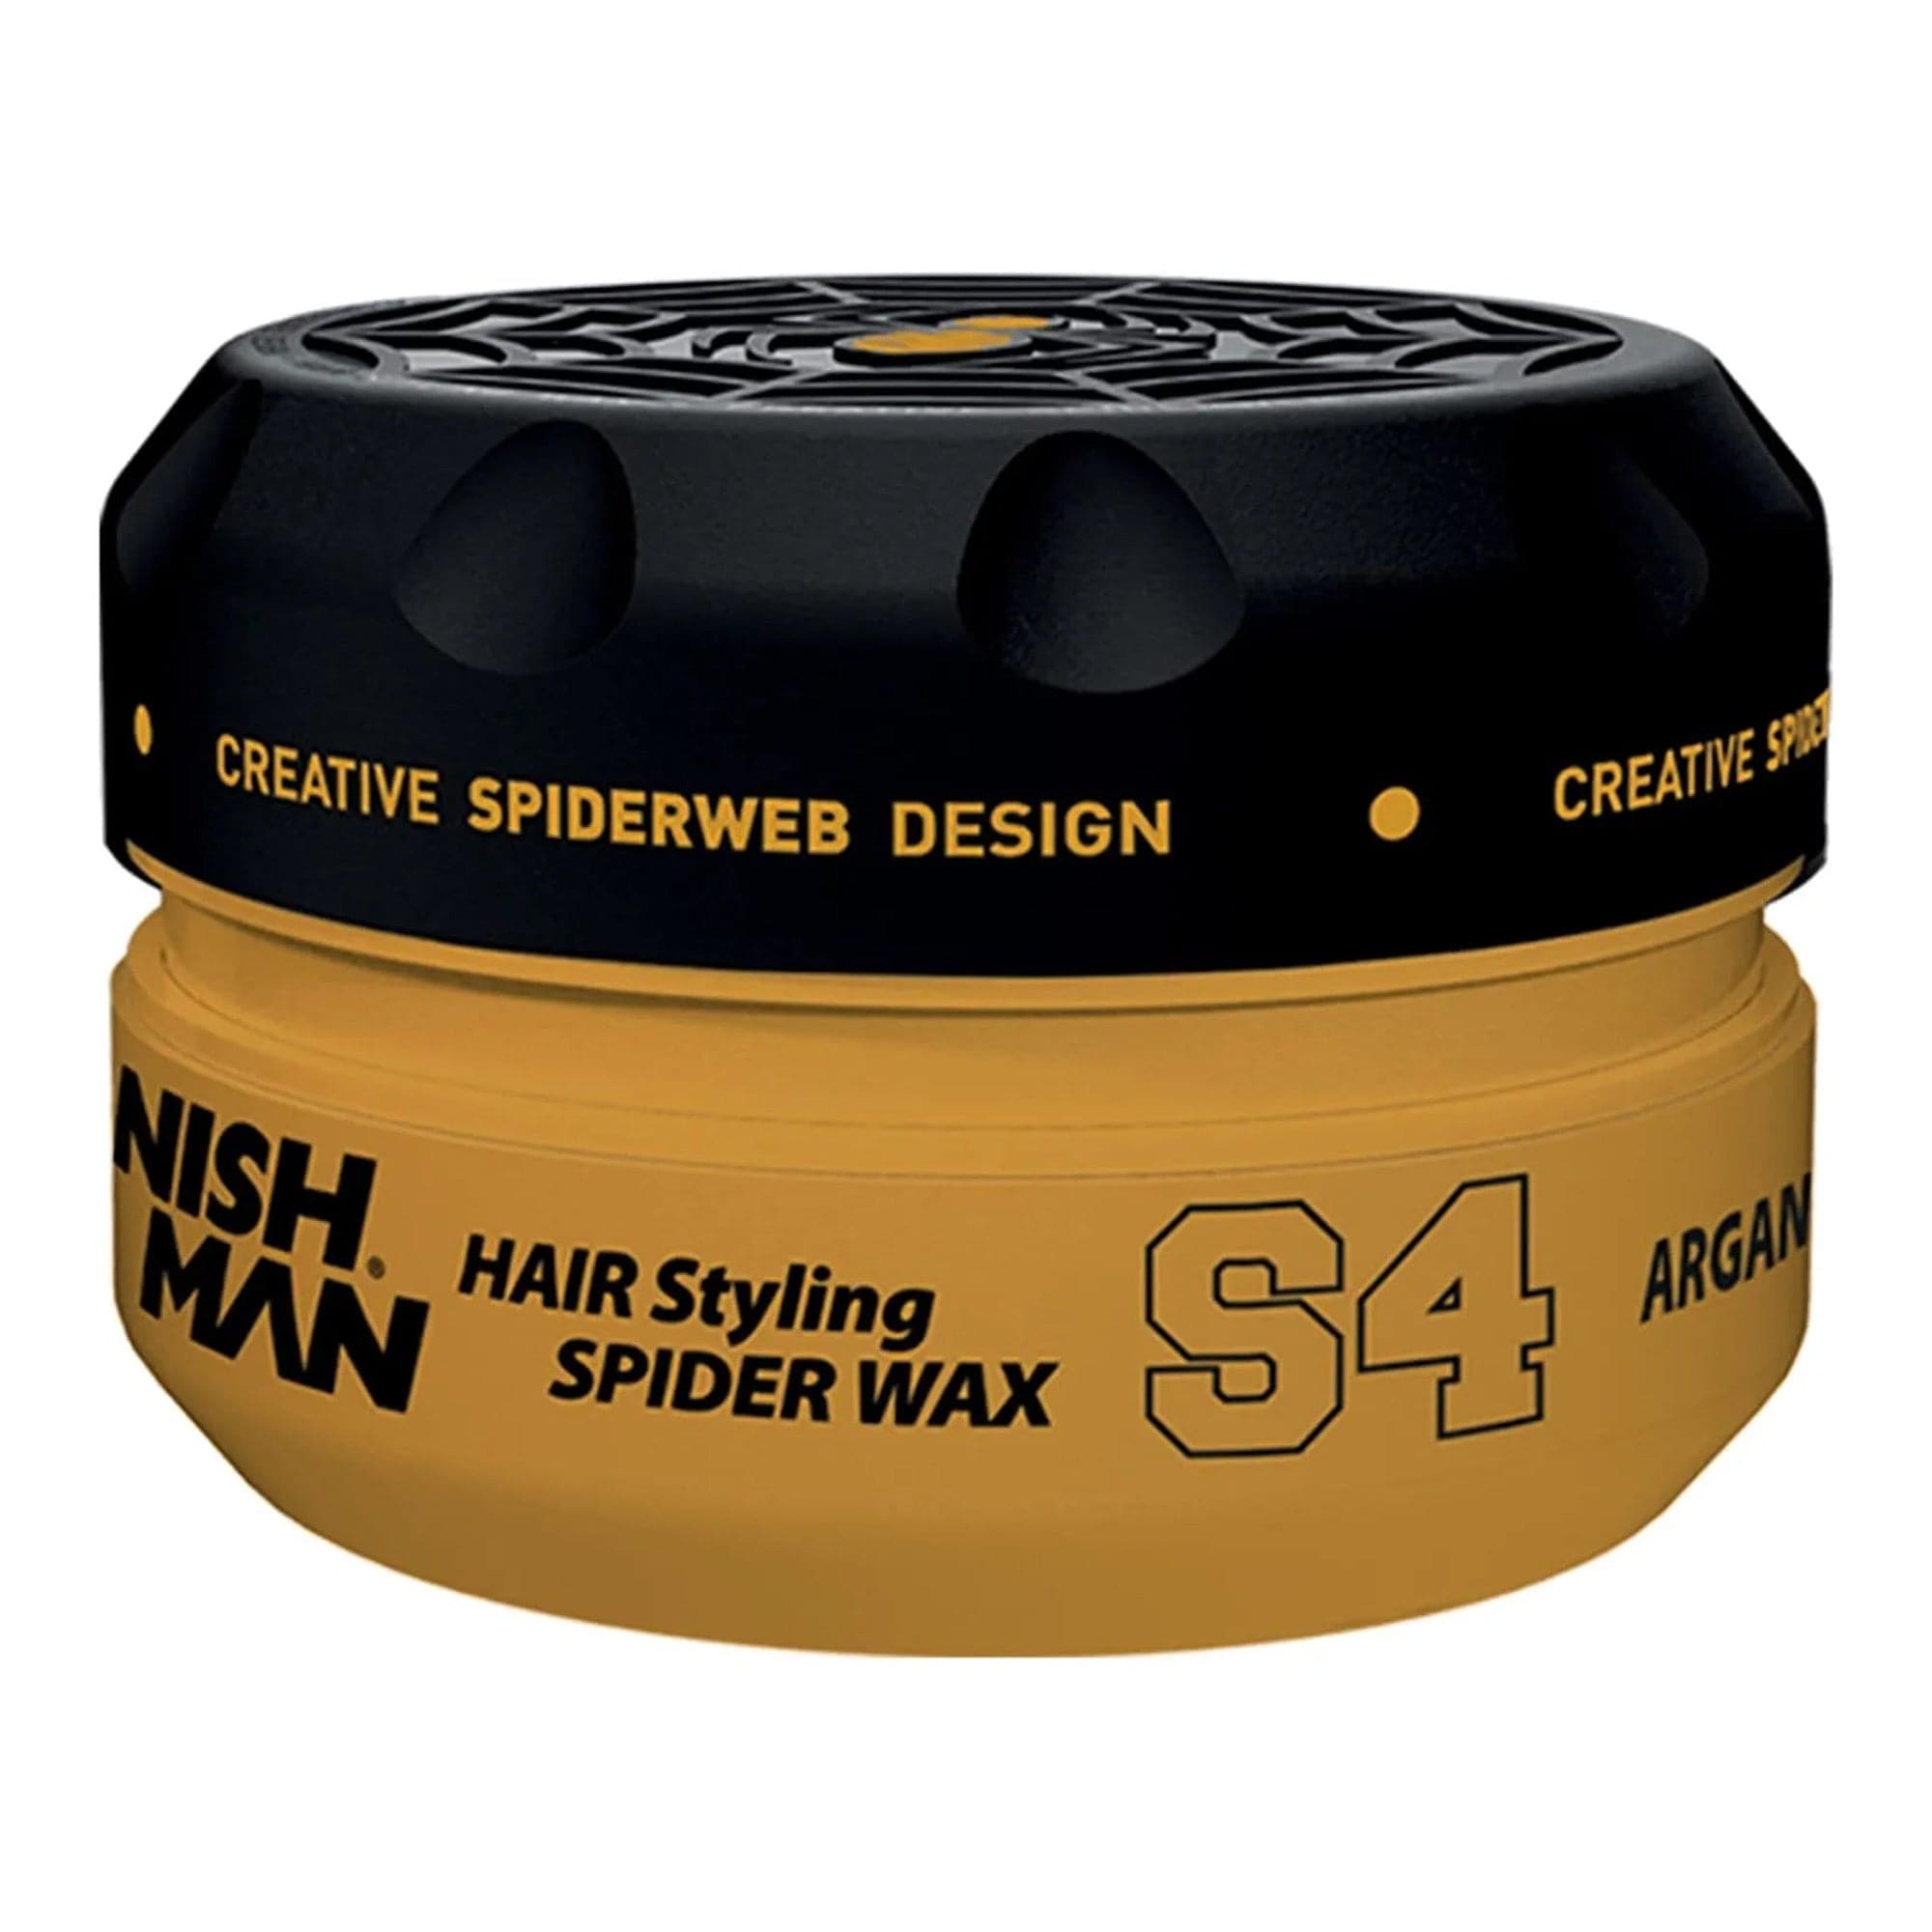 Nishman - Hair Styling Spider Wax S4 Argan 150ml